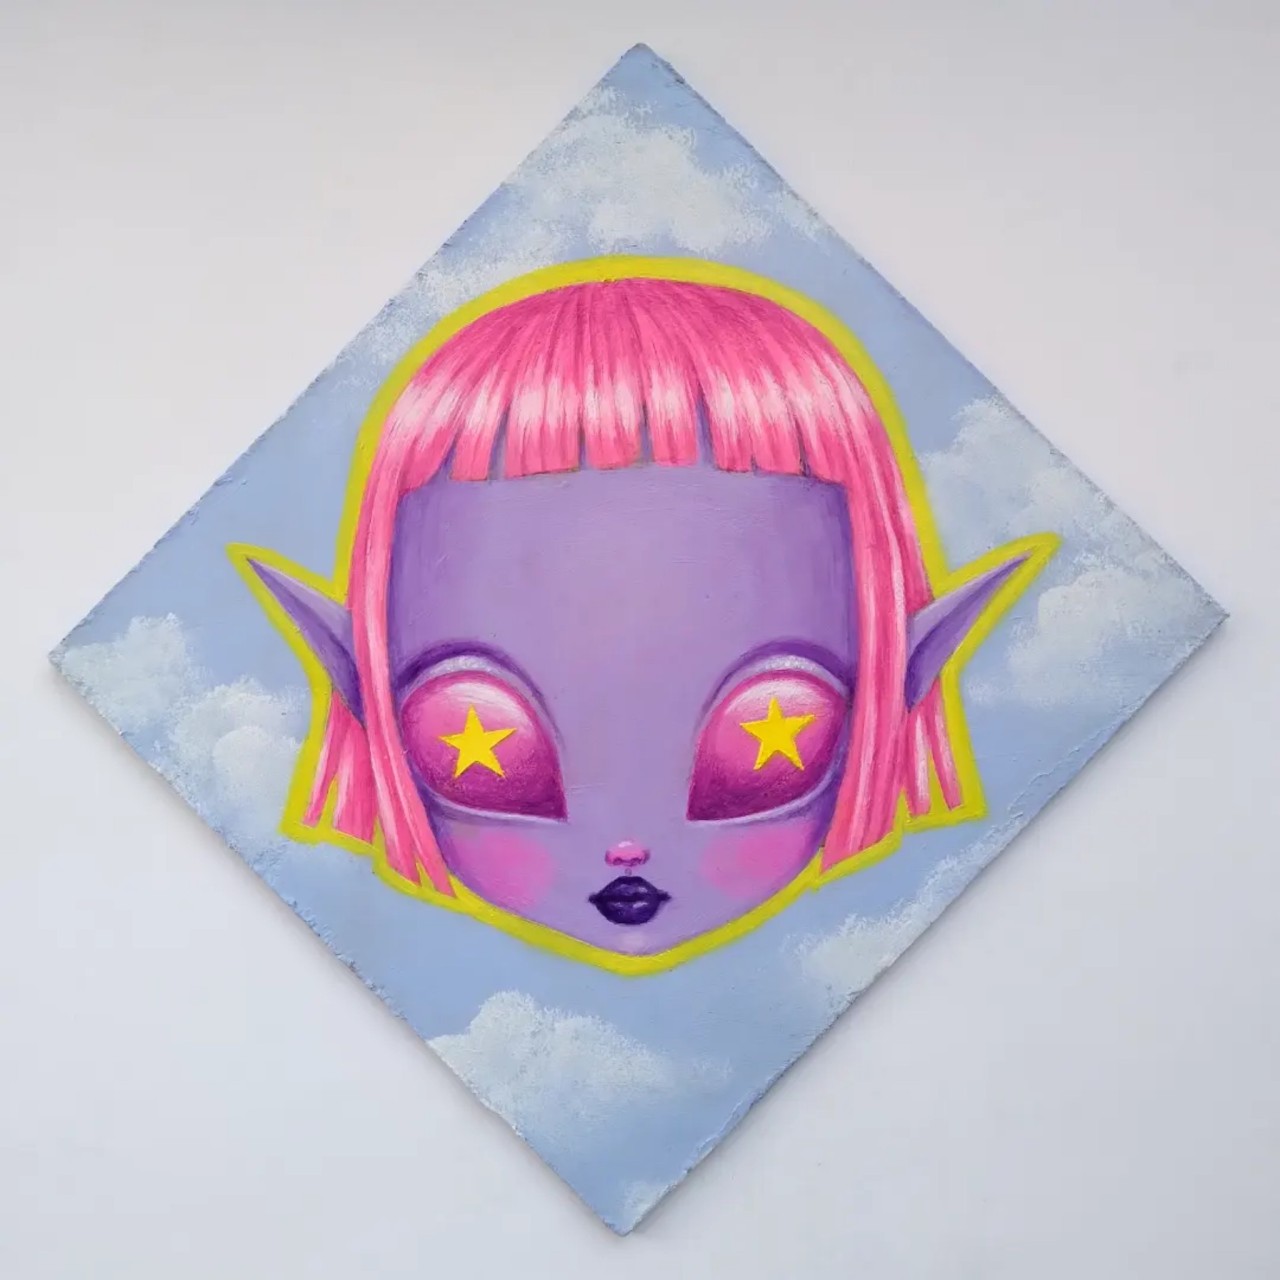 Alien Elf | Acrylic on HardboardEtsyInstagram #alien art#alien girl#alien#acrylic painting#acrylic art#cute art#cute creepy#cute elf#cute girl#cute#creepy art#creepy cute#artwork#pink#pink hair#purple#pastel colors#colorful art#colorful#big eyes#fantasy art#fantasy#small painting#small art #artists on tumblr #art#artistsoninstagram#women artists#artist#pop surrealism